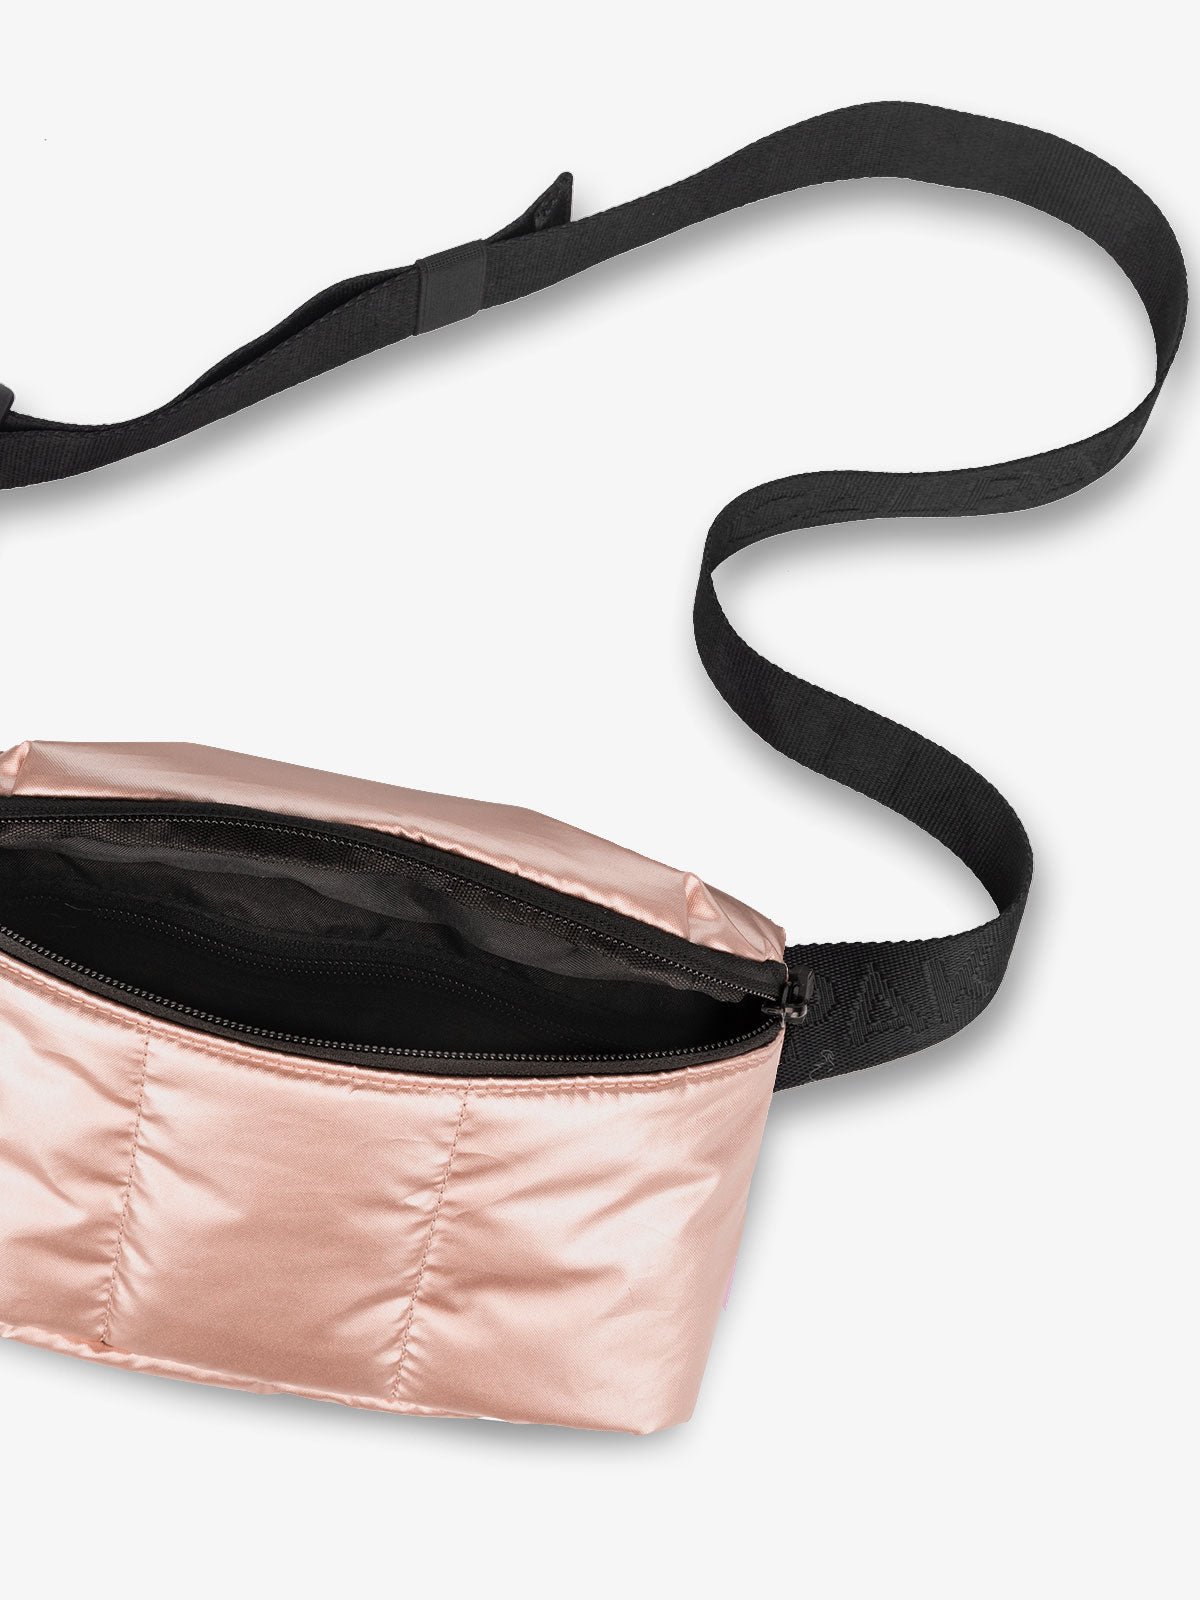 CALPAK Luka small travel waist Bag with multiple pockets in metallic pink rose gold